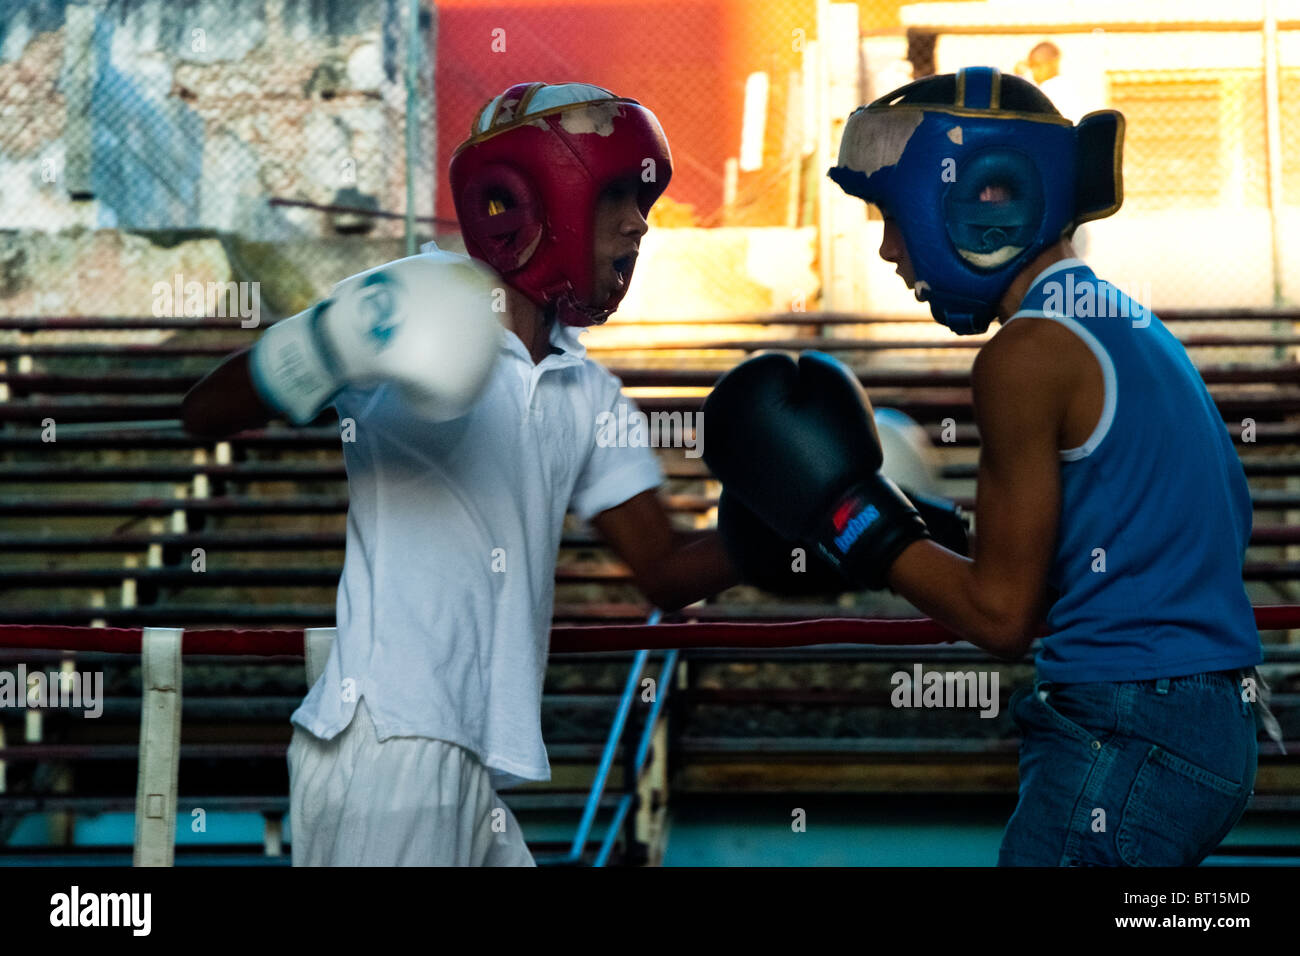 Young Cuban boys during a heavy training match at Rafael Trejo boxing gym in Havana, Cuba. Stock Photo